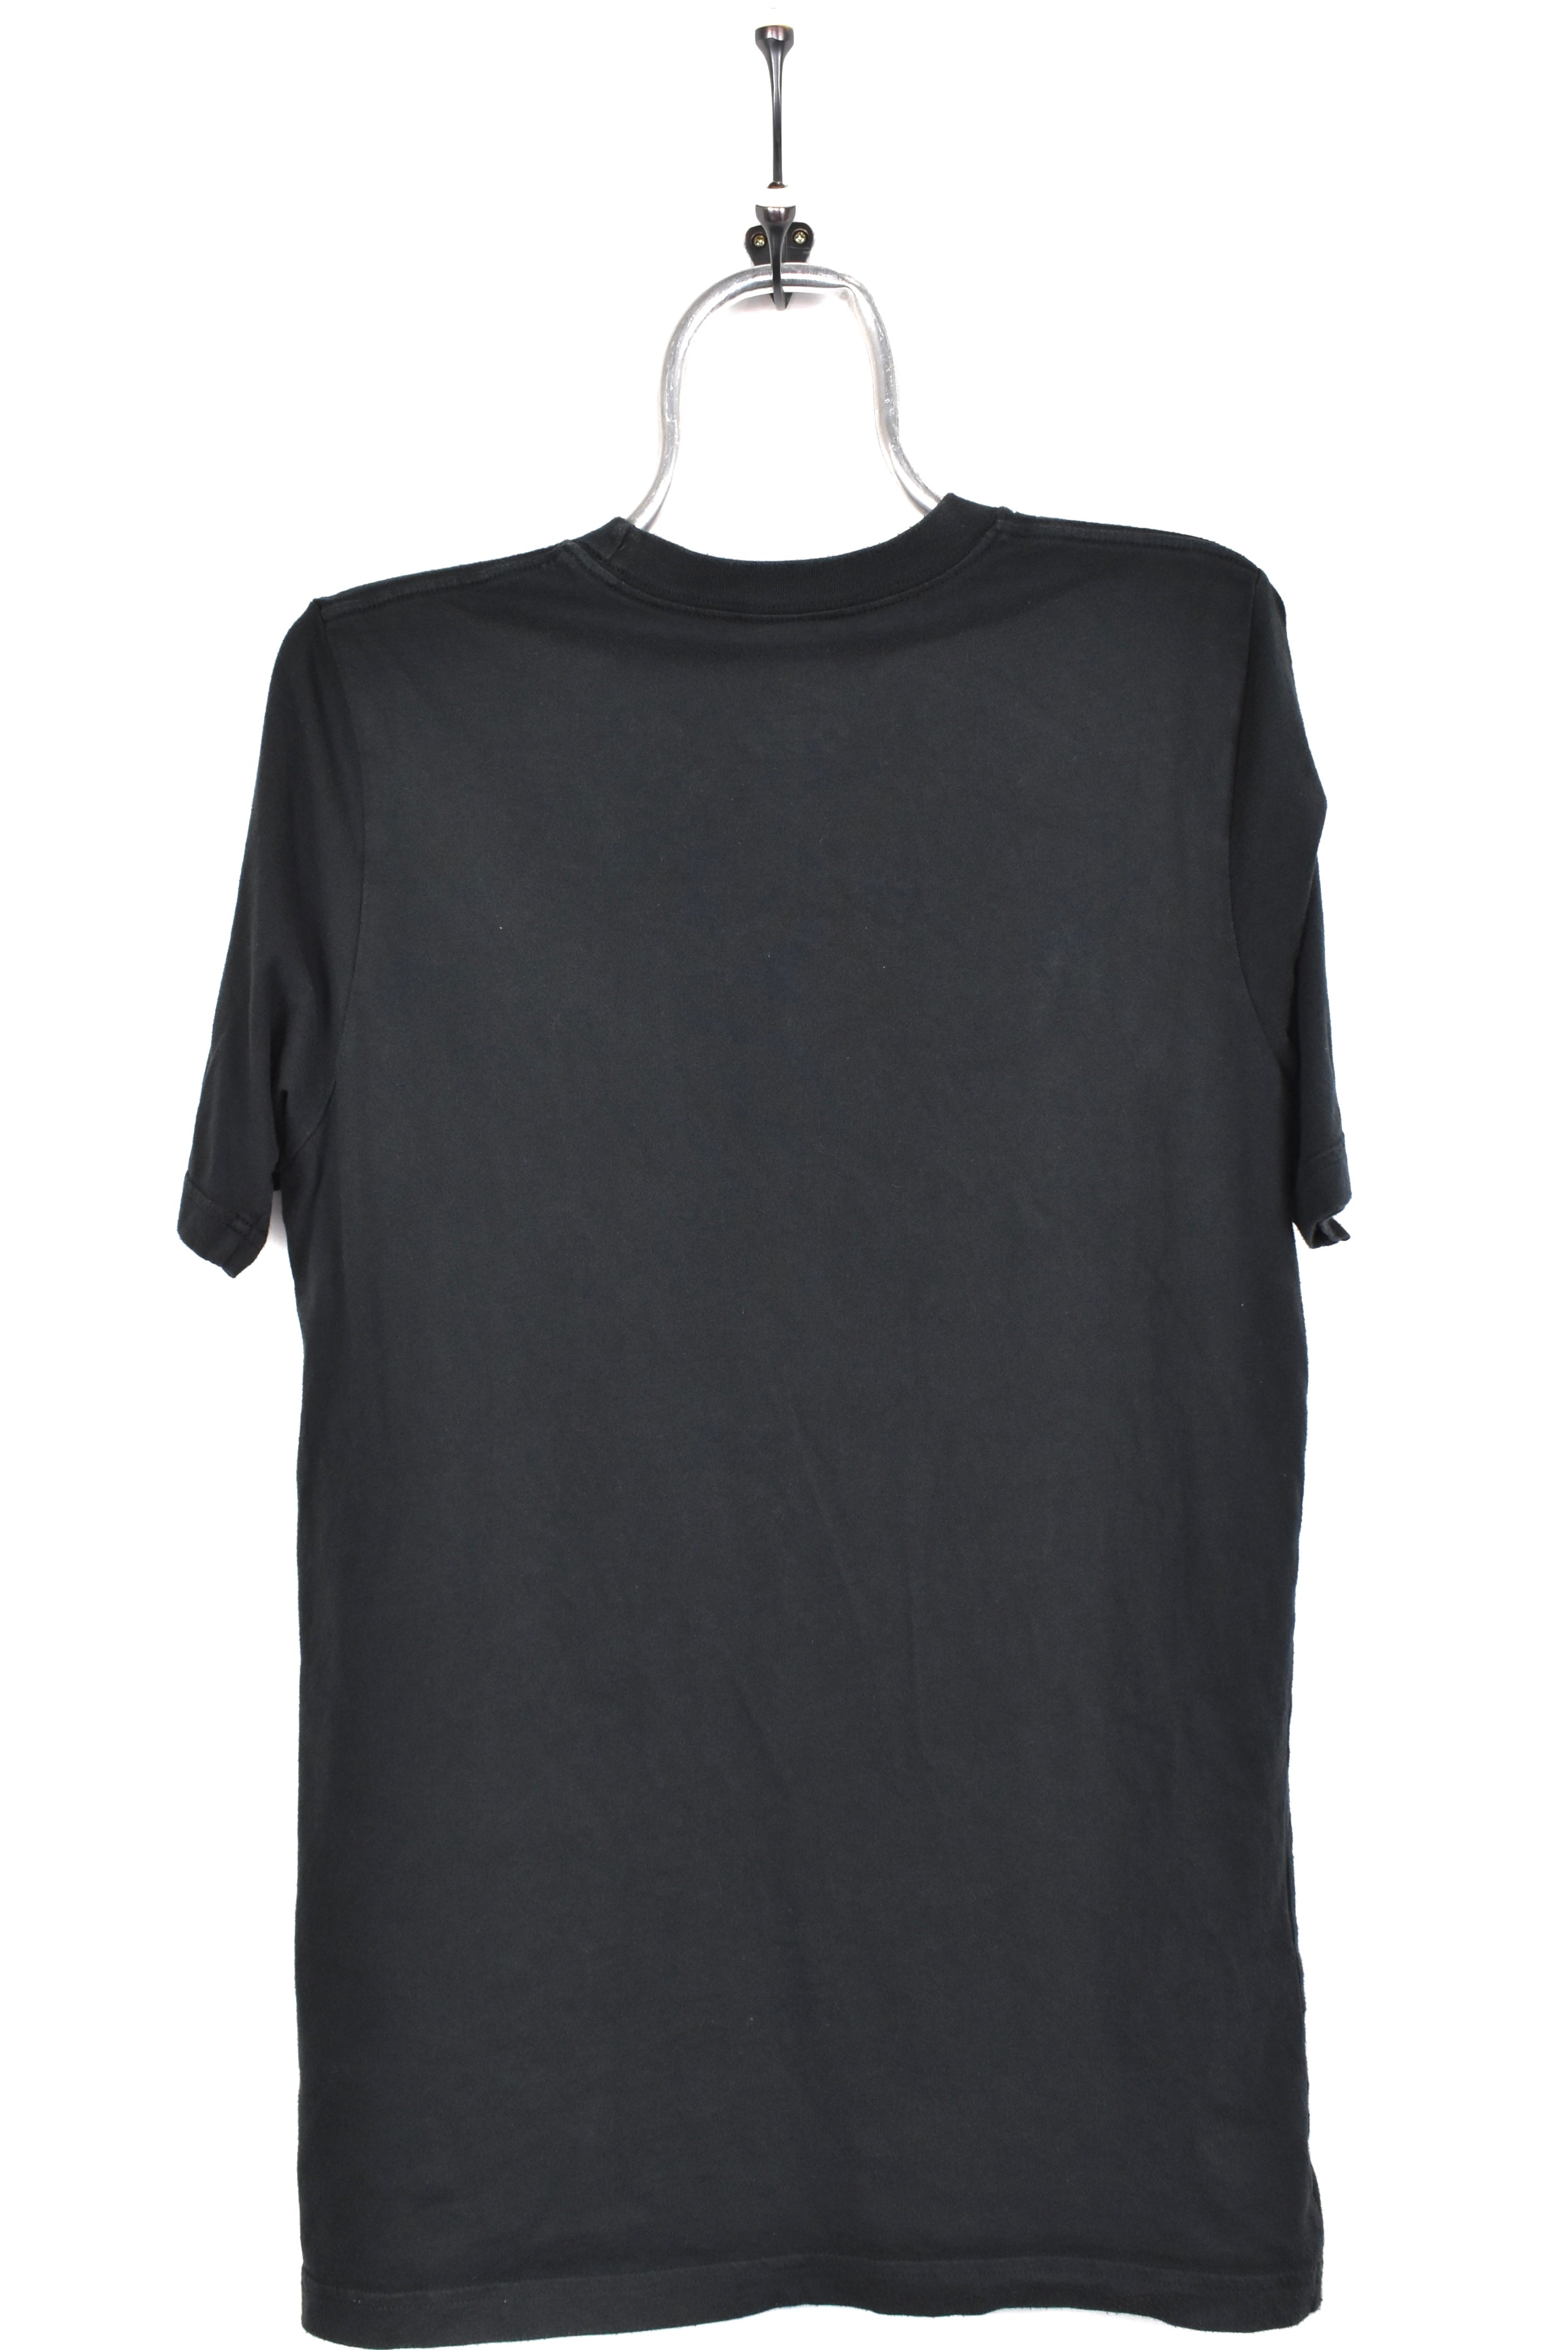 Modern Nike Air shirt, black graphic tee - AU S NIKE